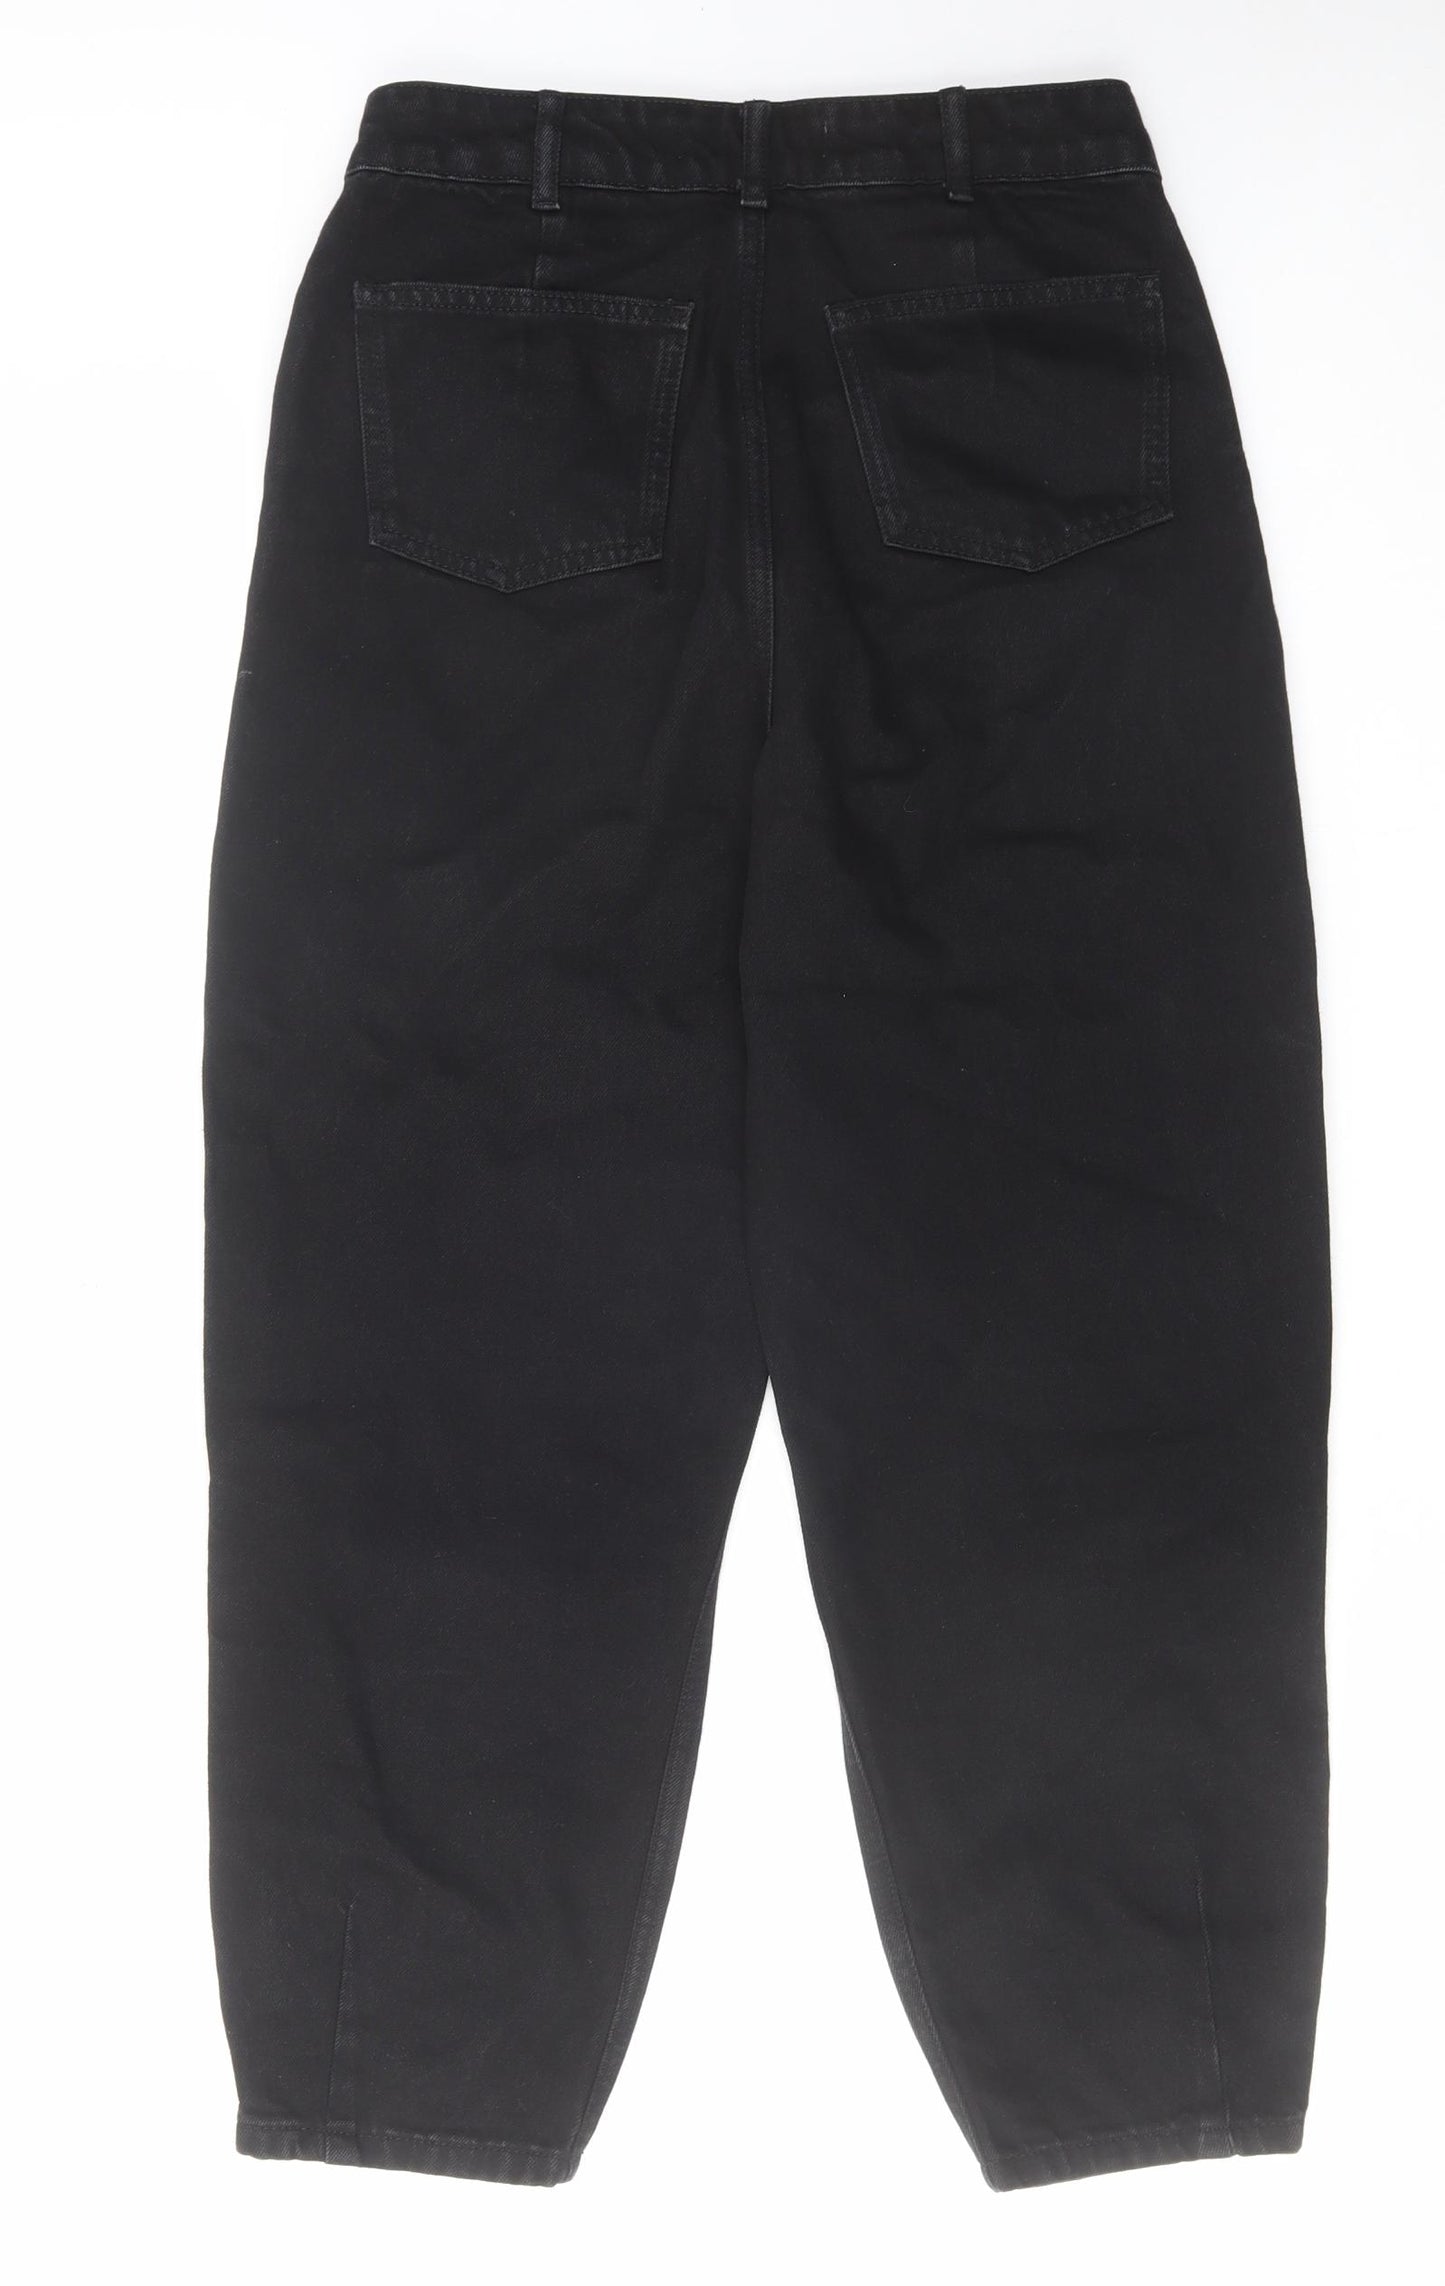 John Lewis Womens Black Cotton Mom Jeans Size 8 L25.5 in Regular Zip